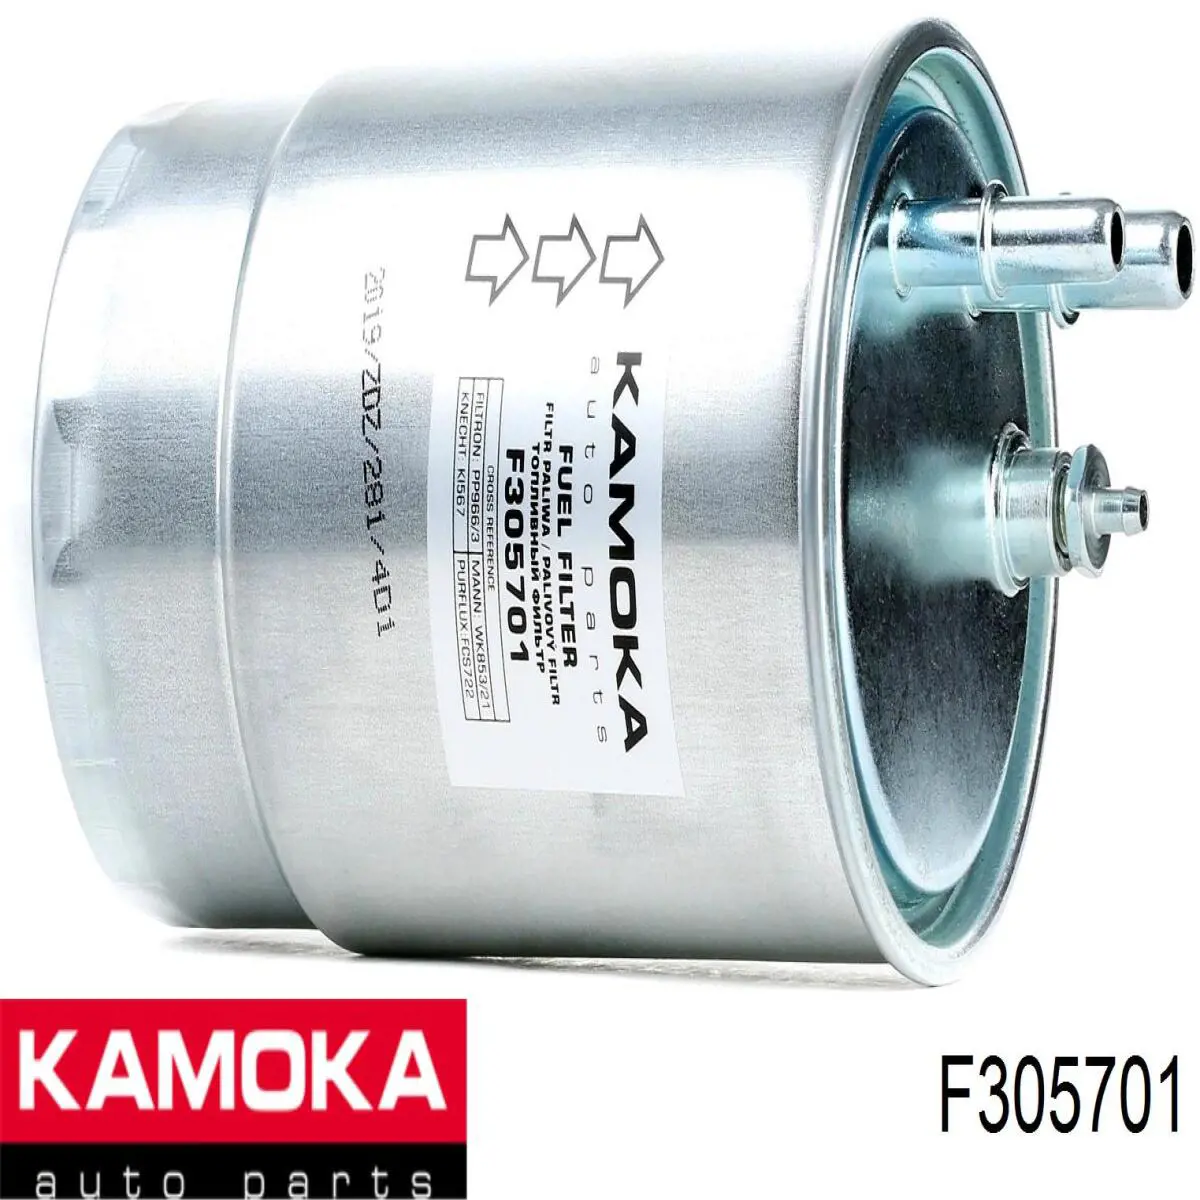 F305701 Kamoka filtro combustible